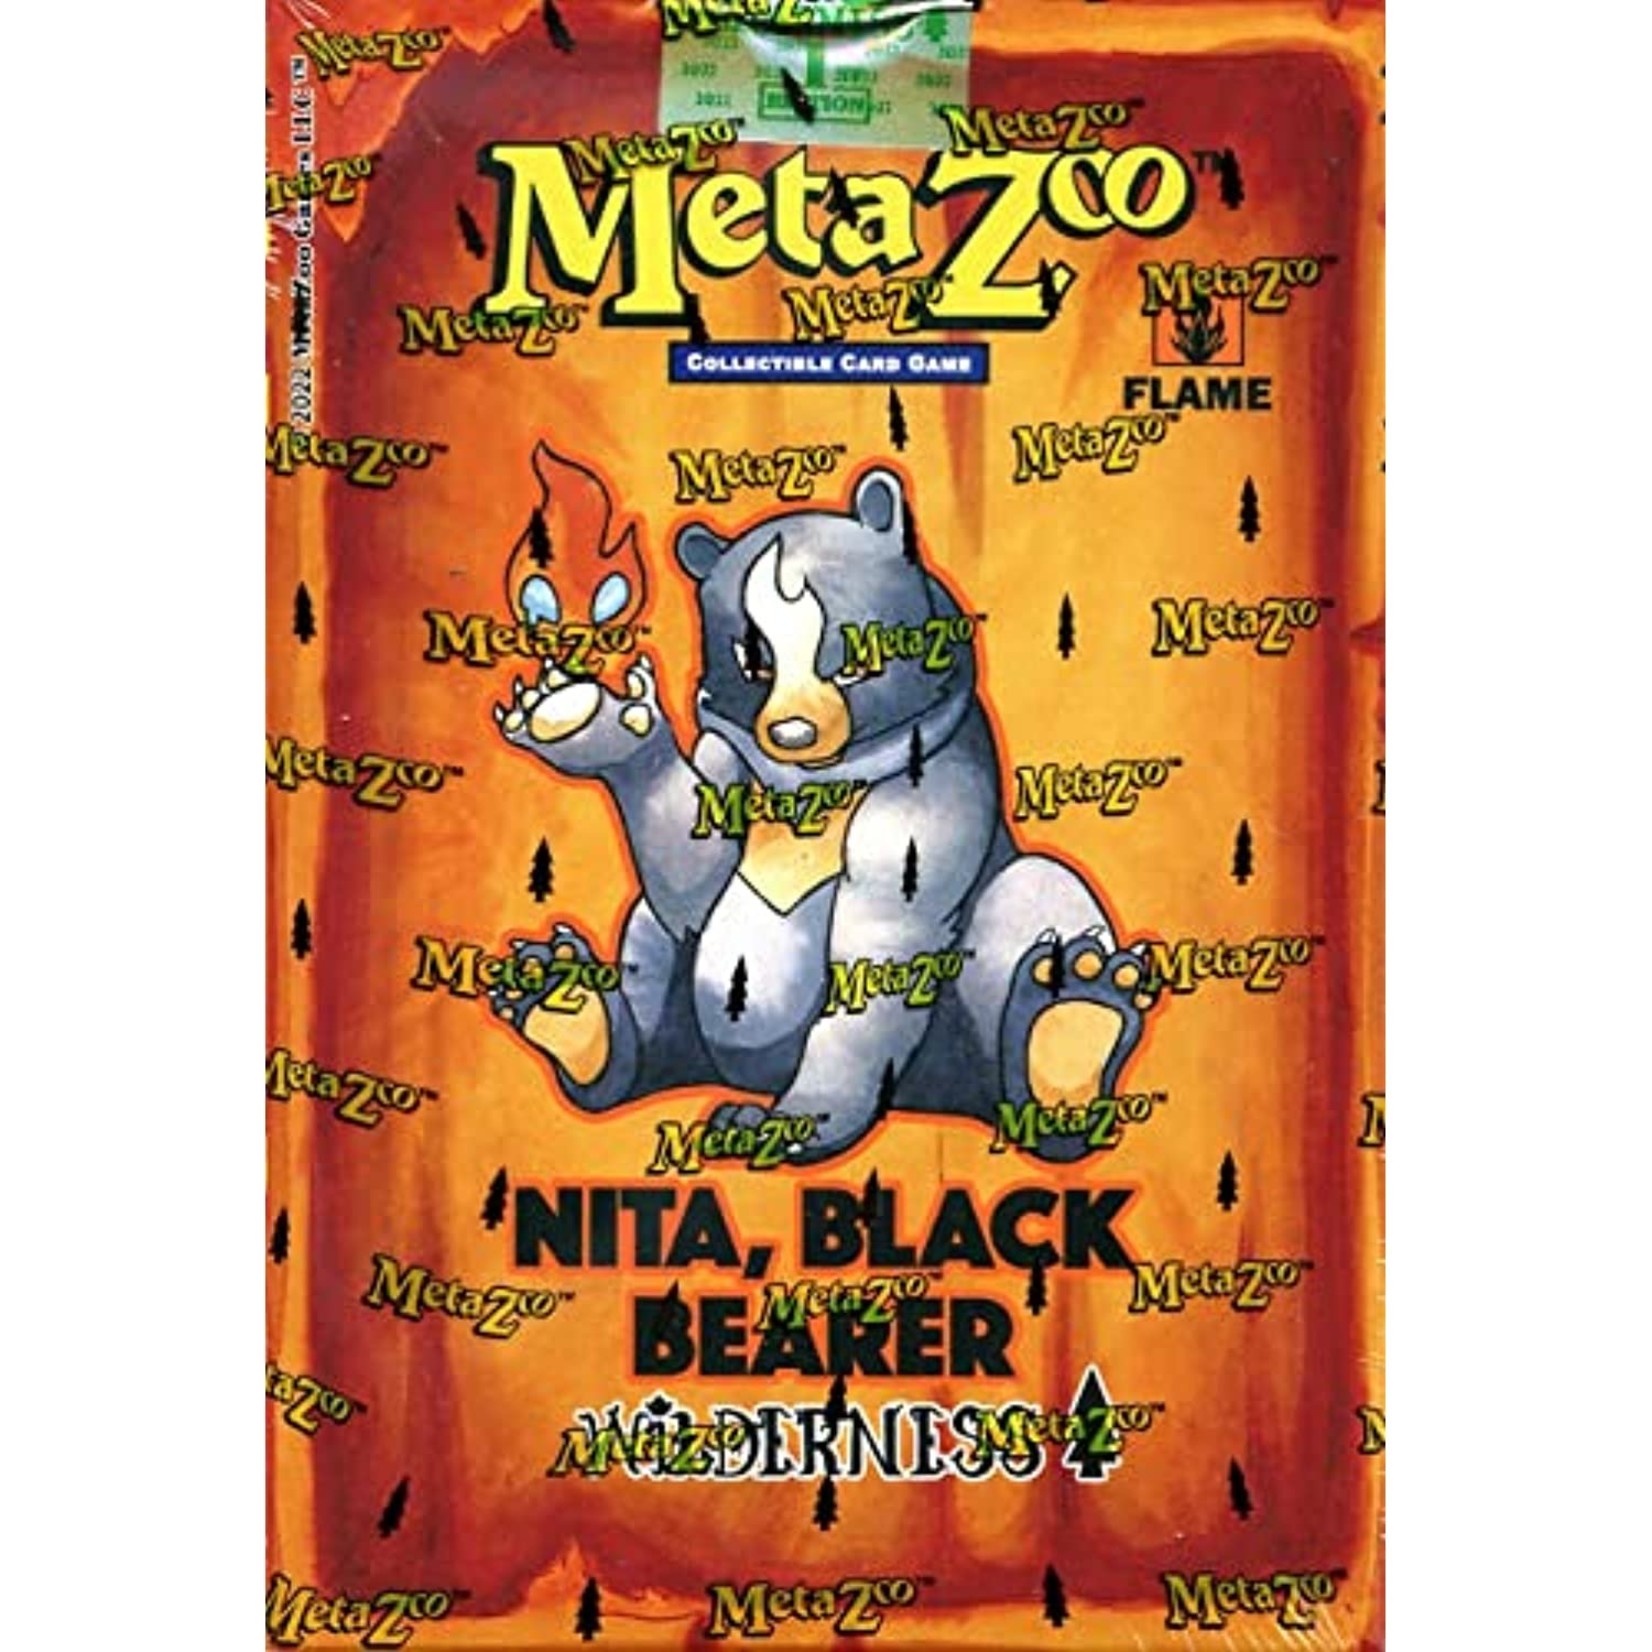 MetaZoo MetaZoo Trading Card Game Cryptid Nation Base Set Nita, Black, Bearer Wilderness Theme Deck [1st Edition]